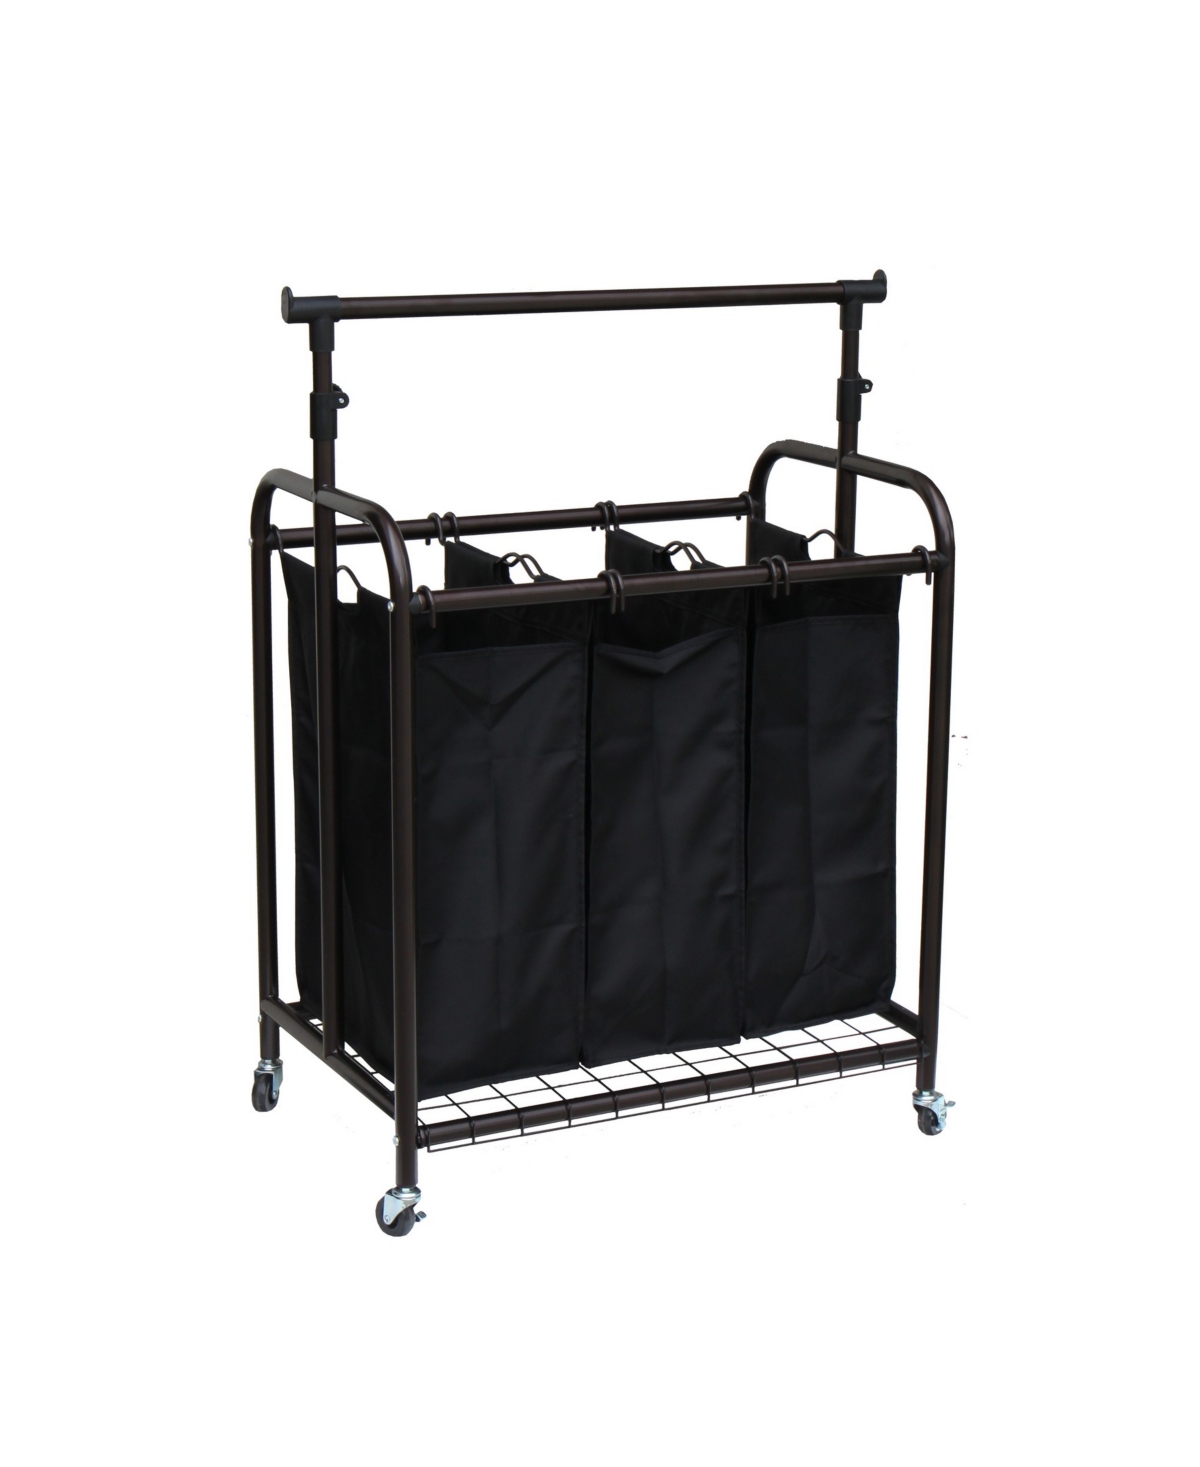 3-Bag Rolling Laundry Sorter with Adjustable Hanging Bar - Bronze